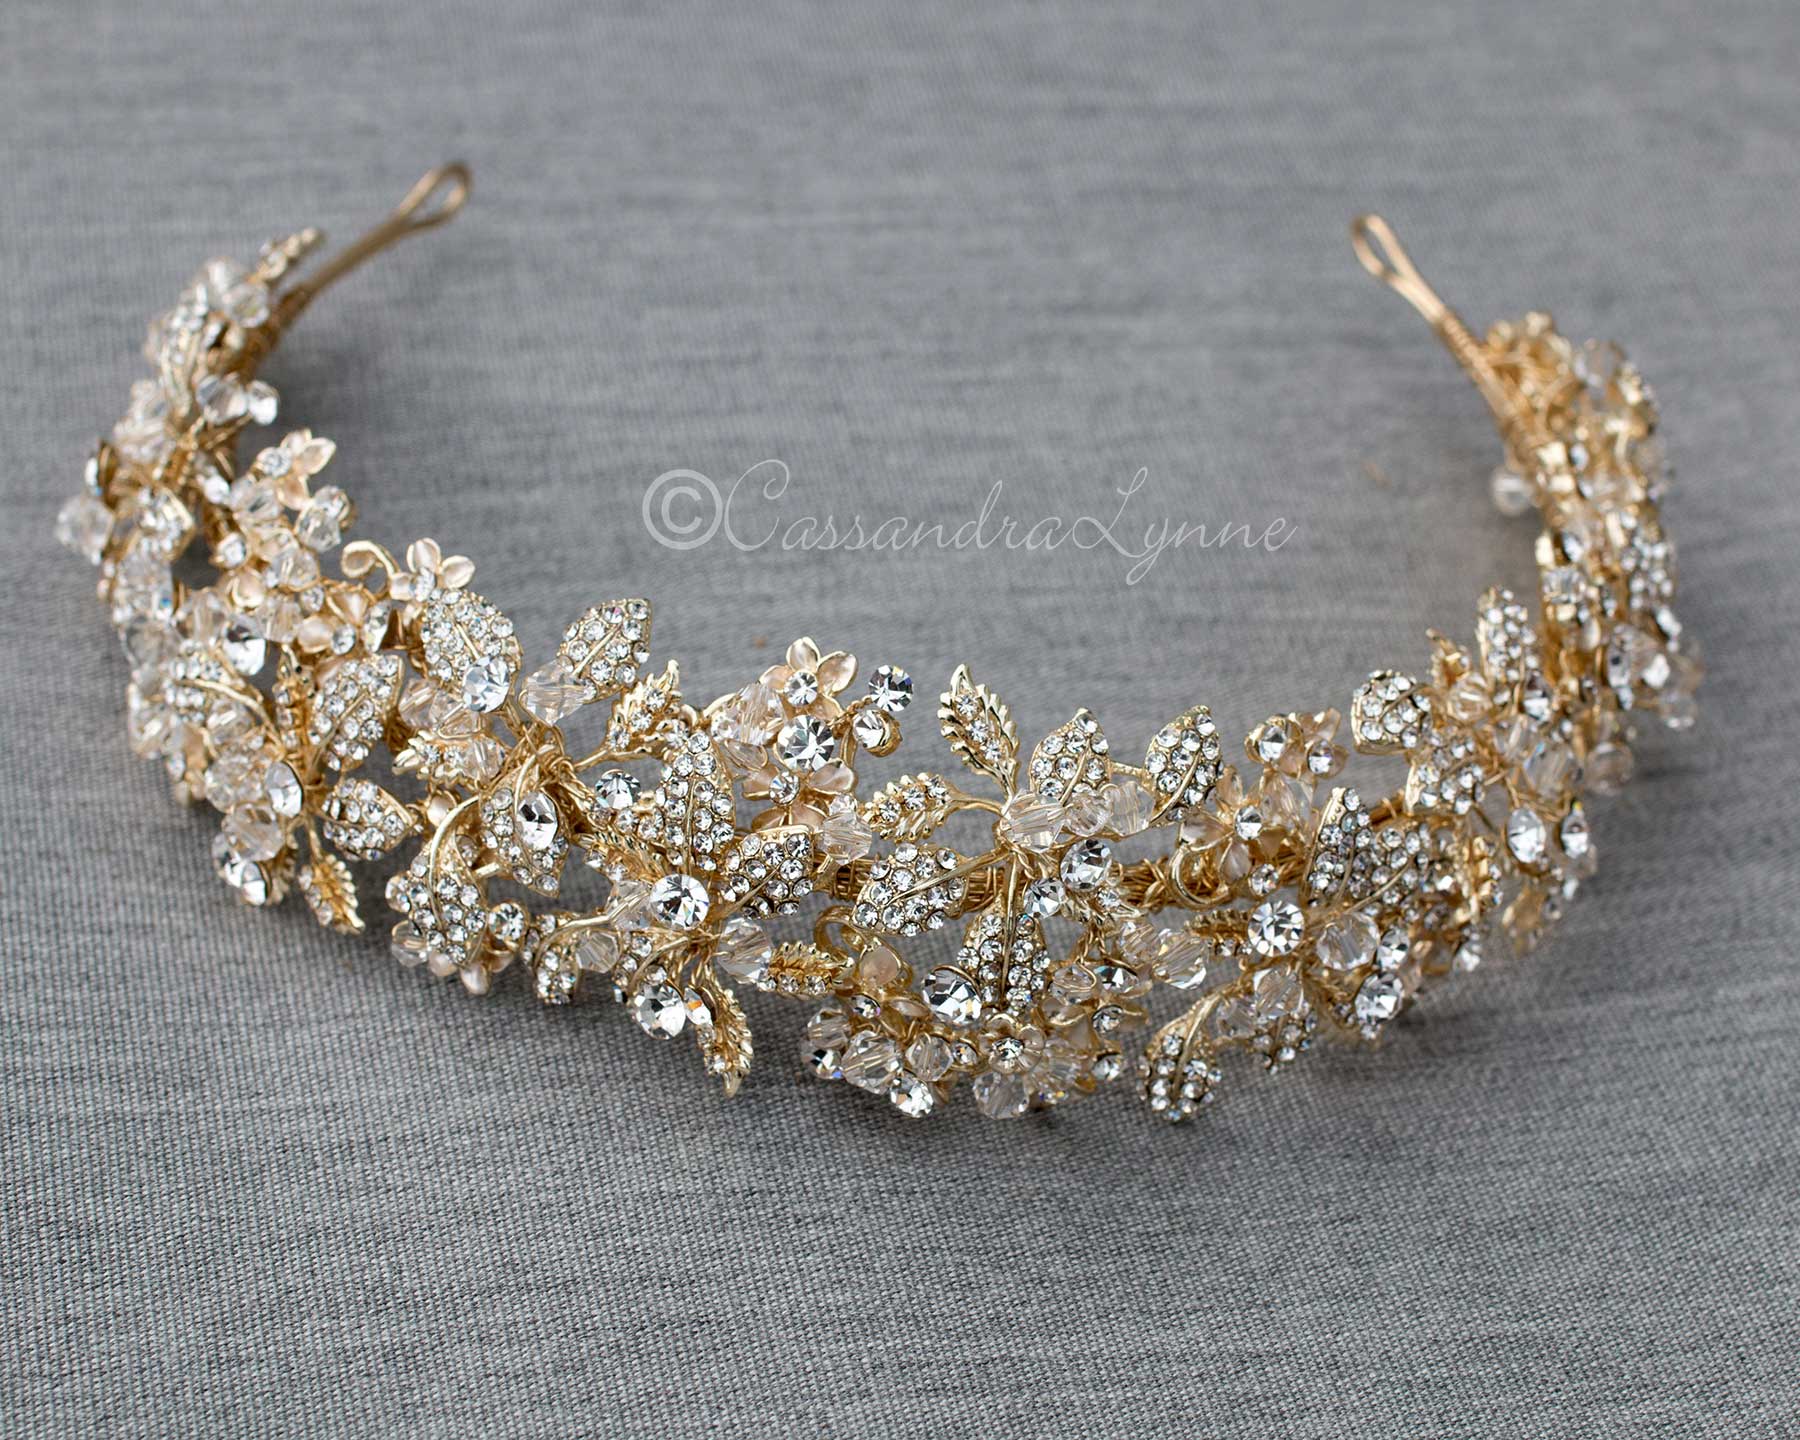 Intricate Wedding Headband with Crystal Beads - Cassandra Lynne